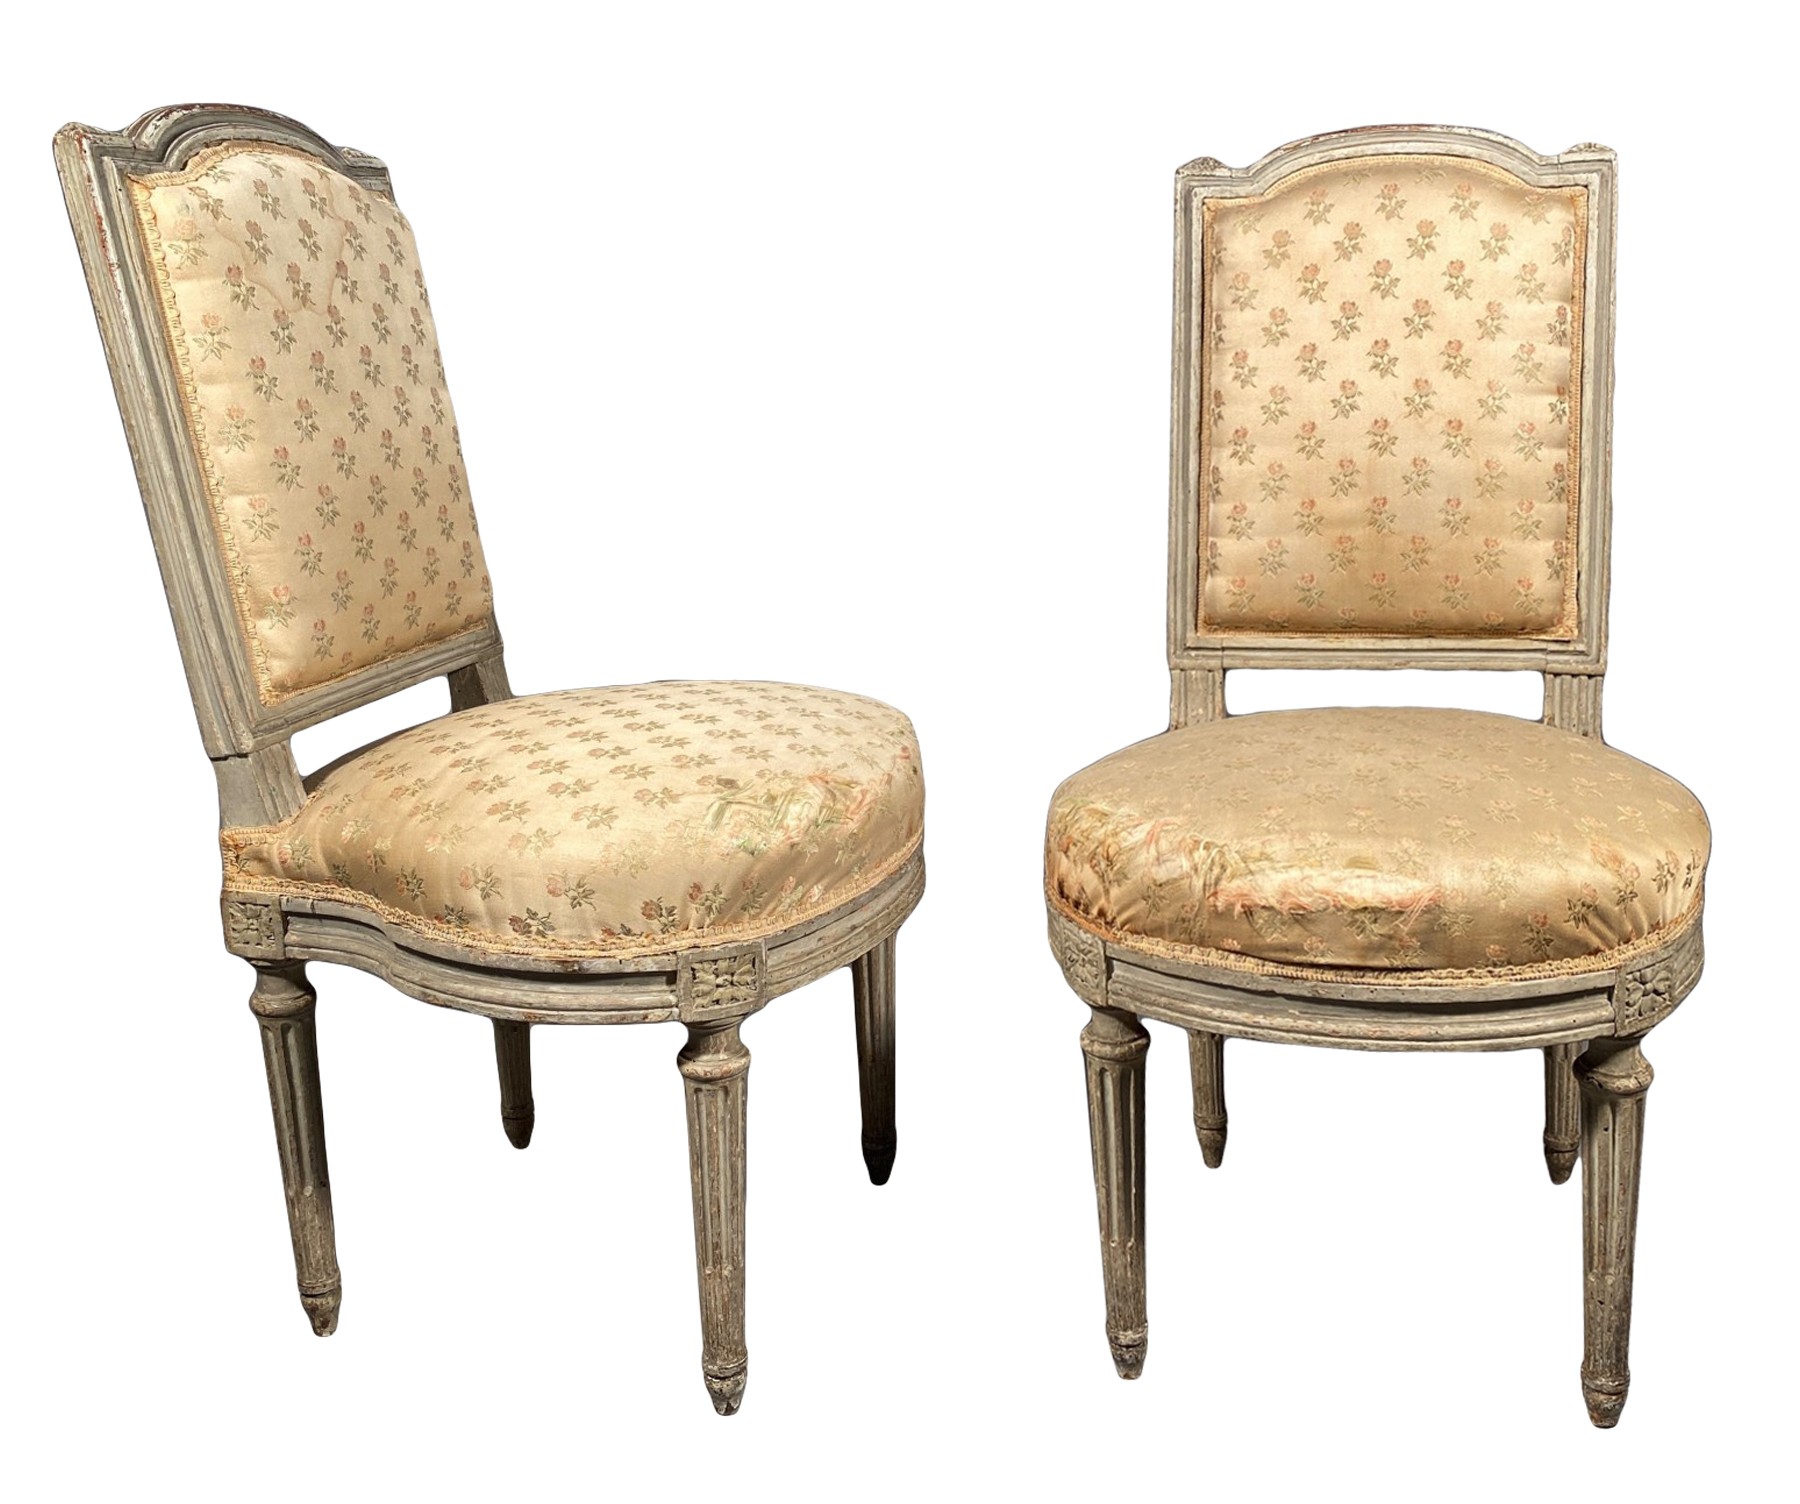 Pair Of Chairs Stamped G Jacob Paris Louis Xvi Period Circa 1780